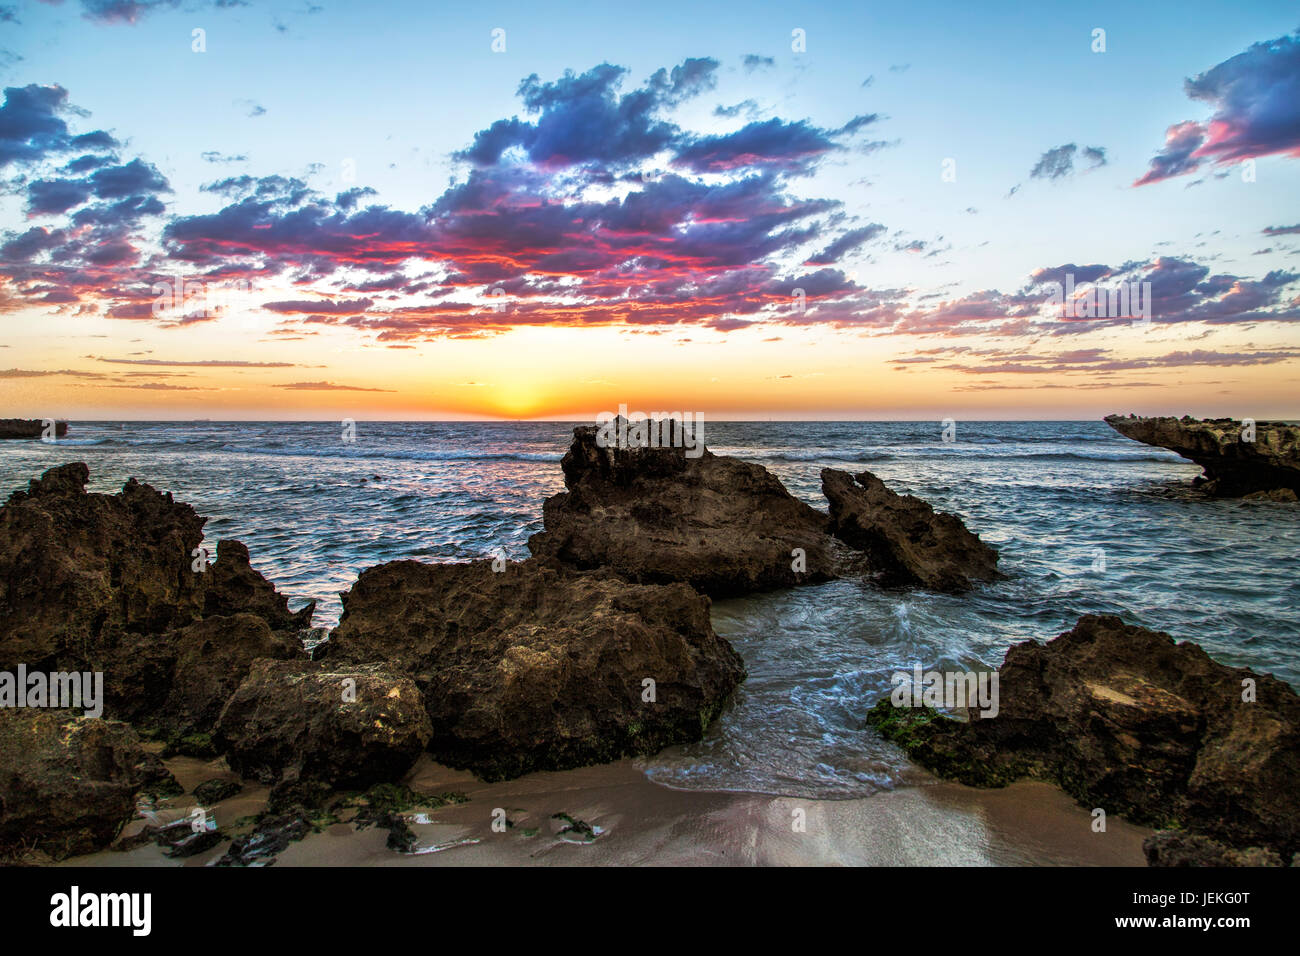 Rocky coastline at sunset, Australia Stock Photo